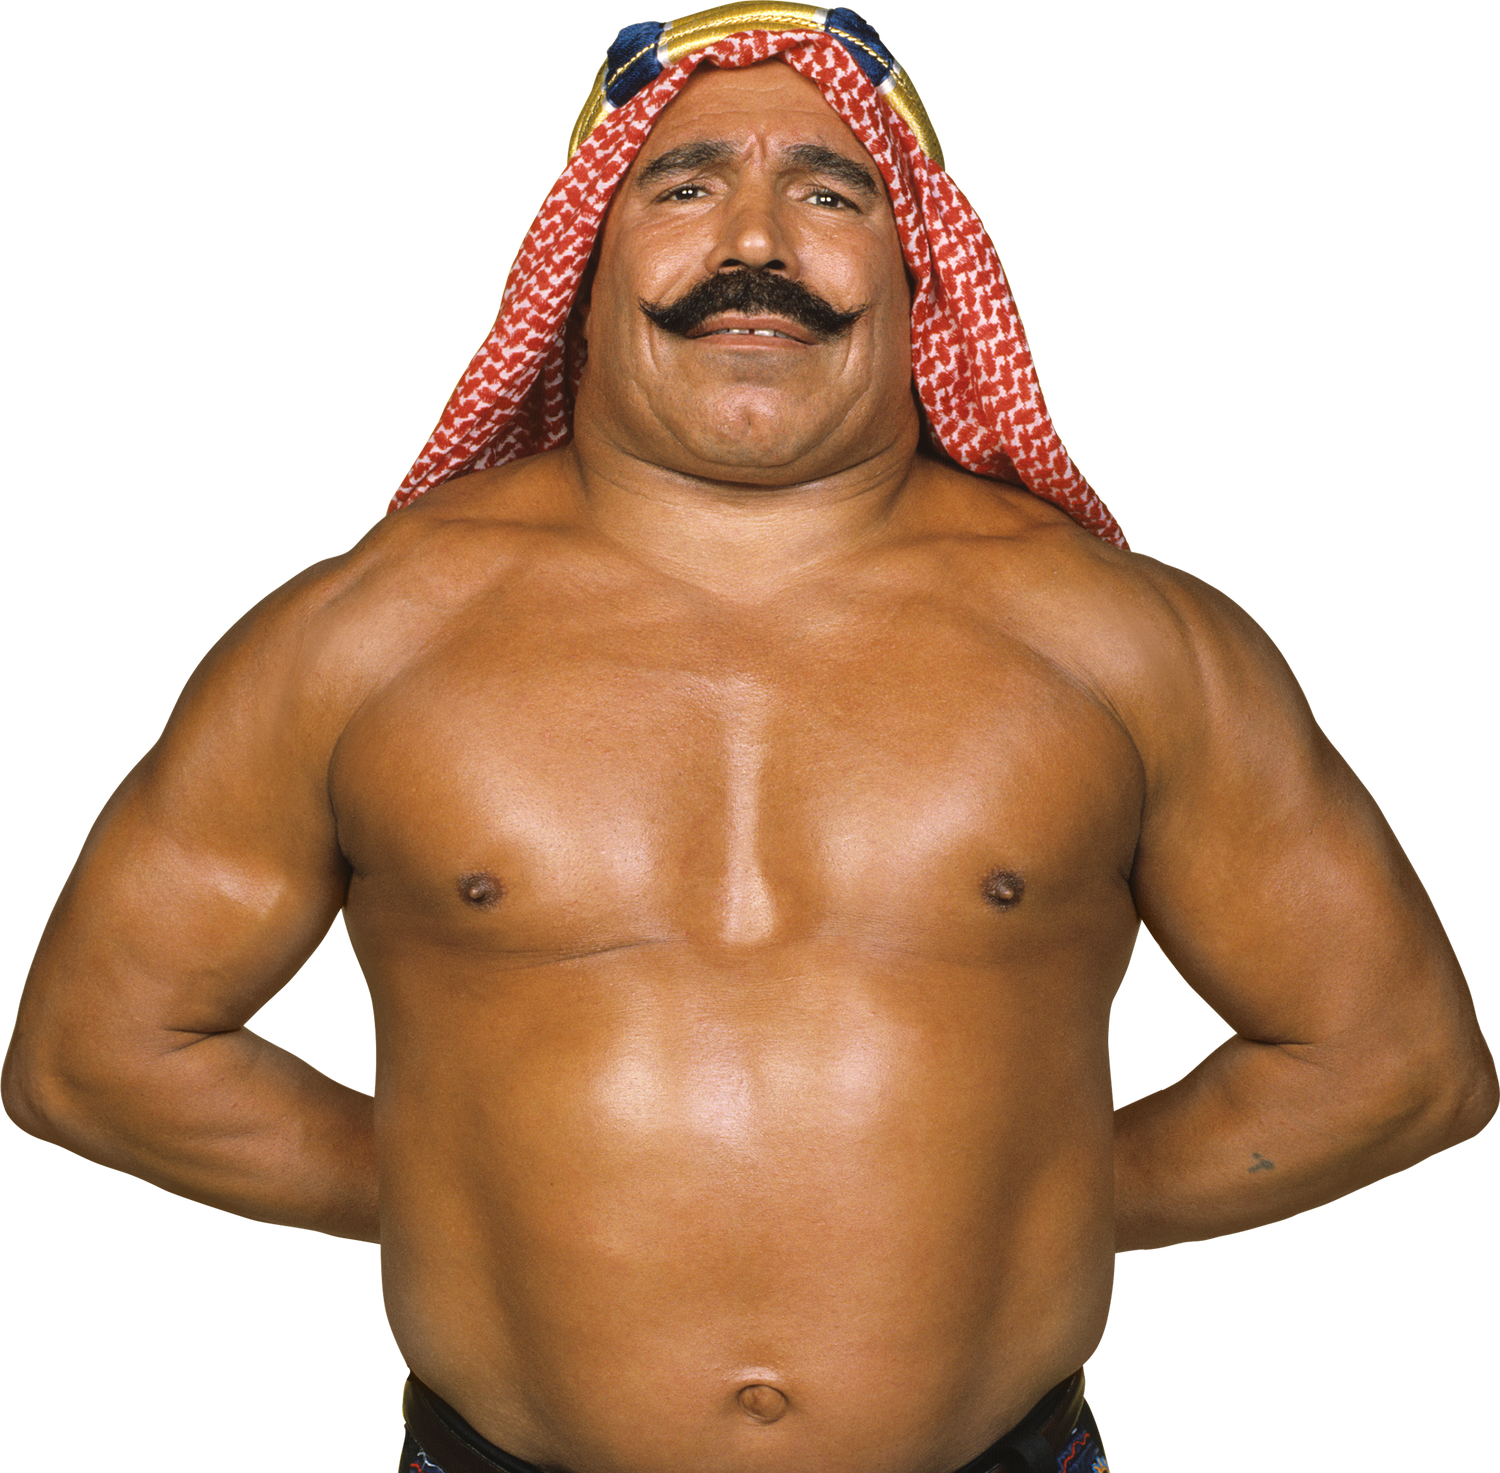 All Iron Sheik Wrestling Action Figures